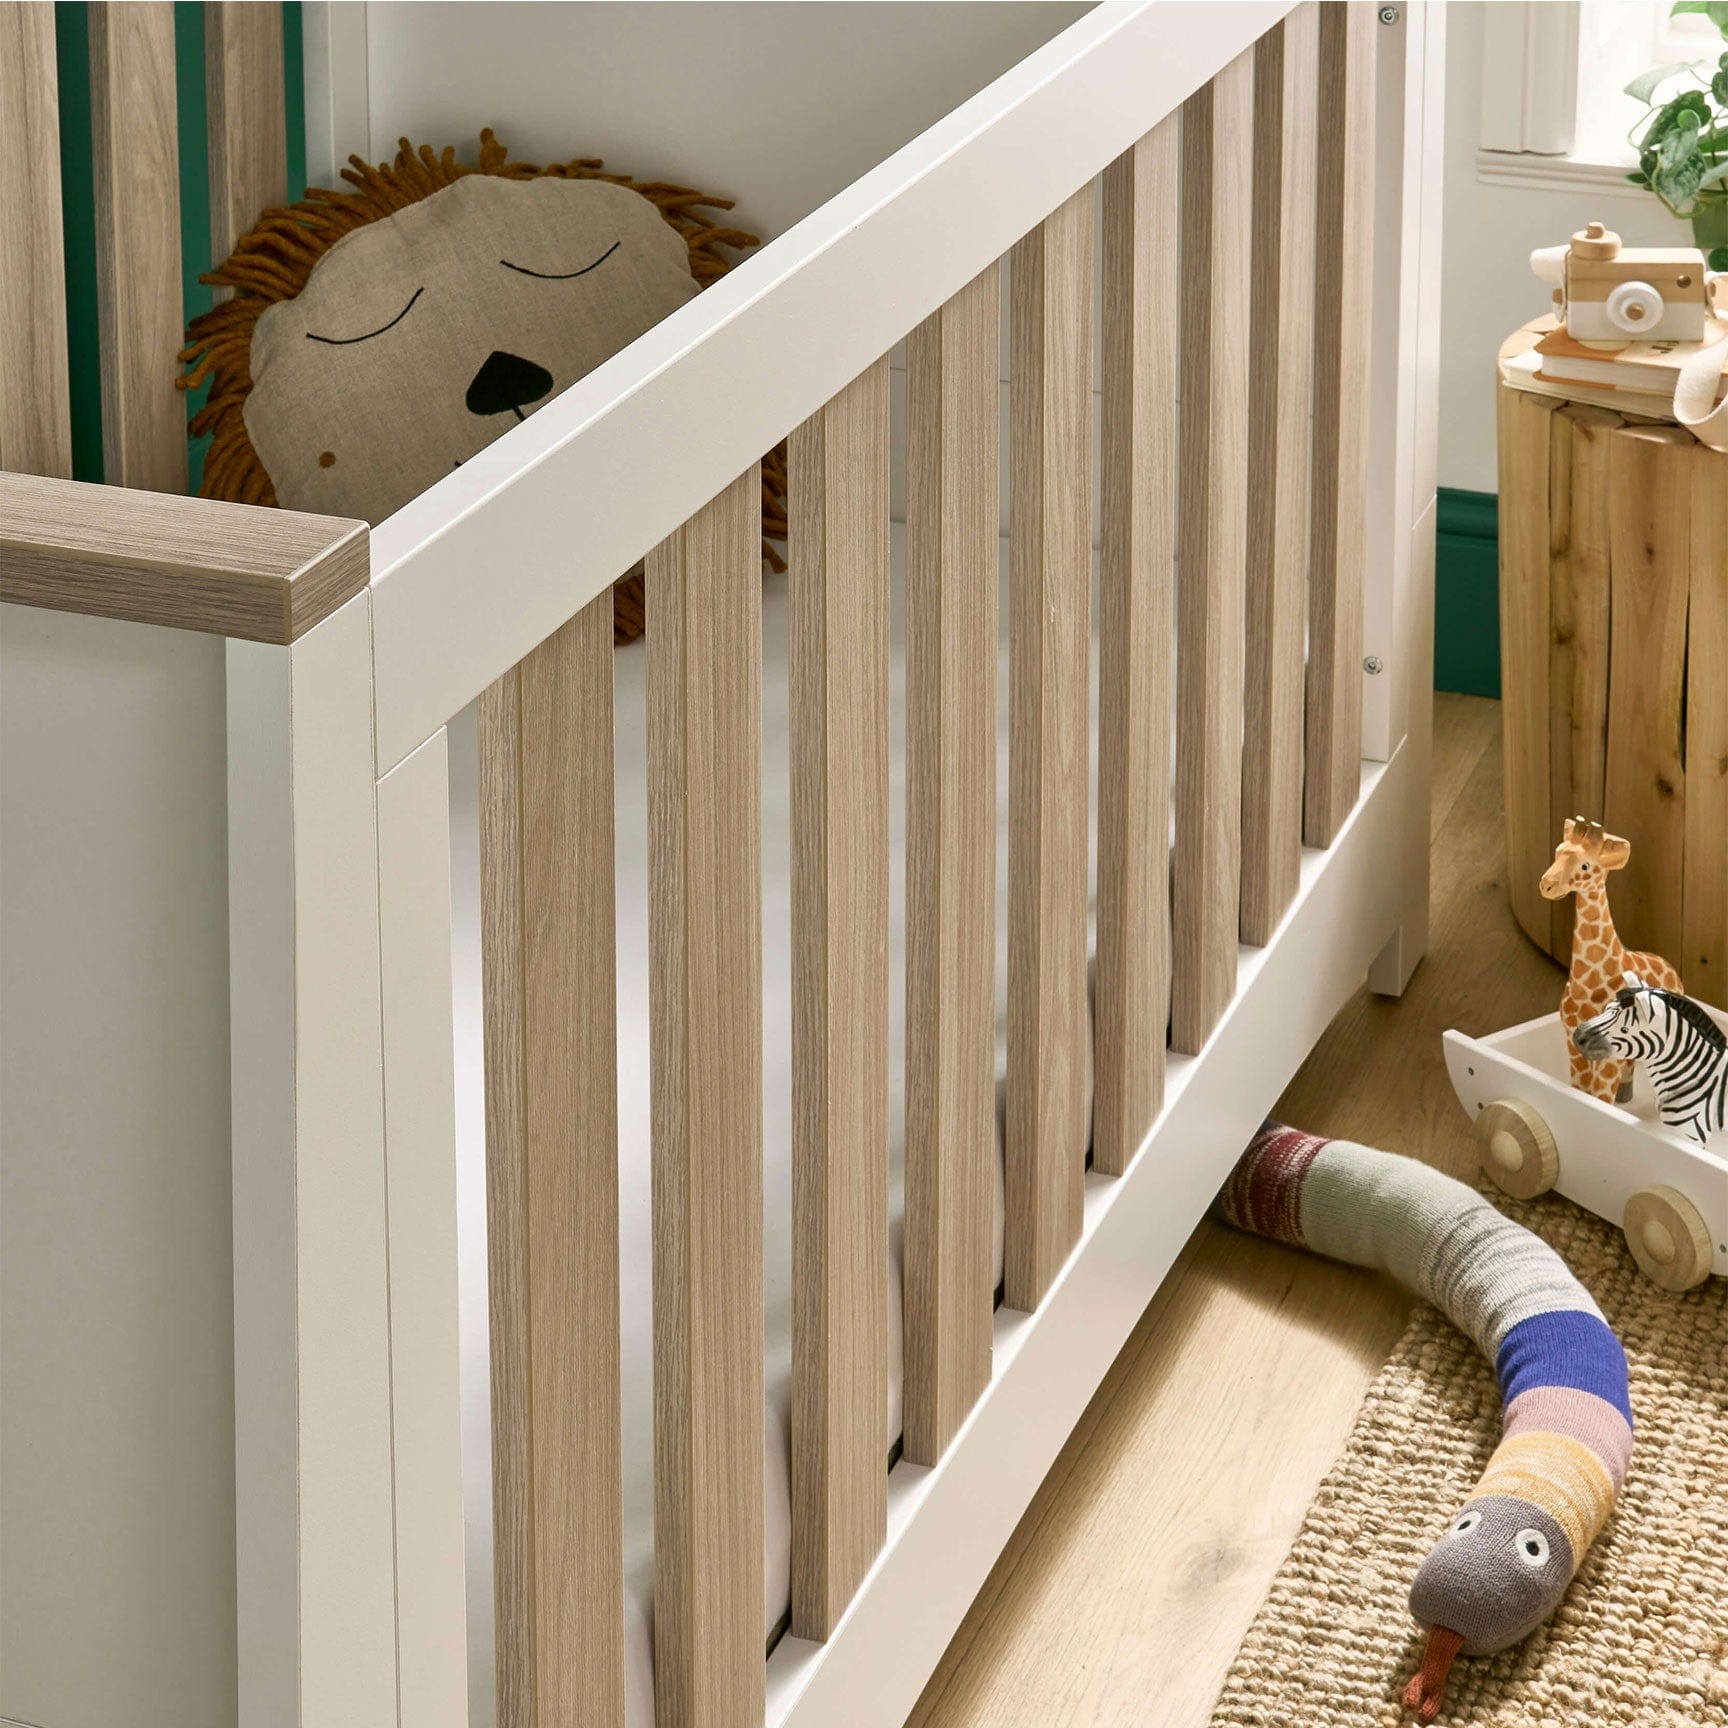 CuddleCo Ada 3 Piece Furniture Nursery Room Sets